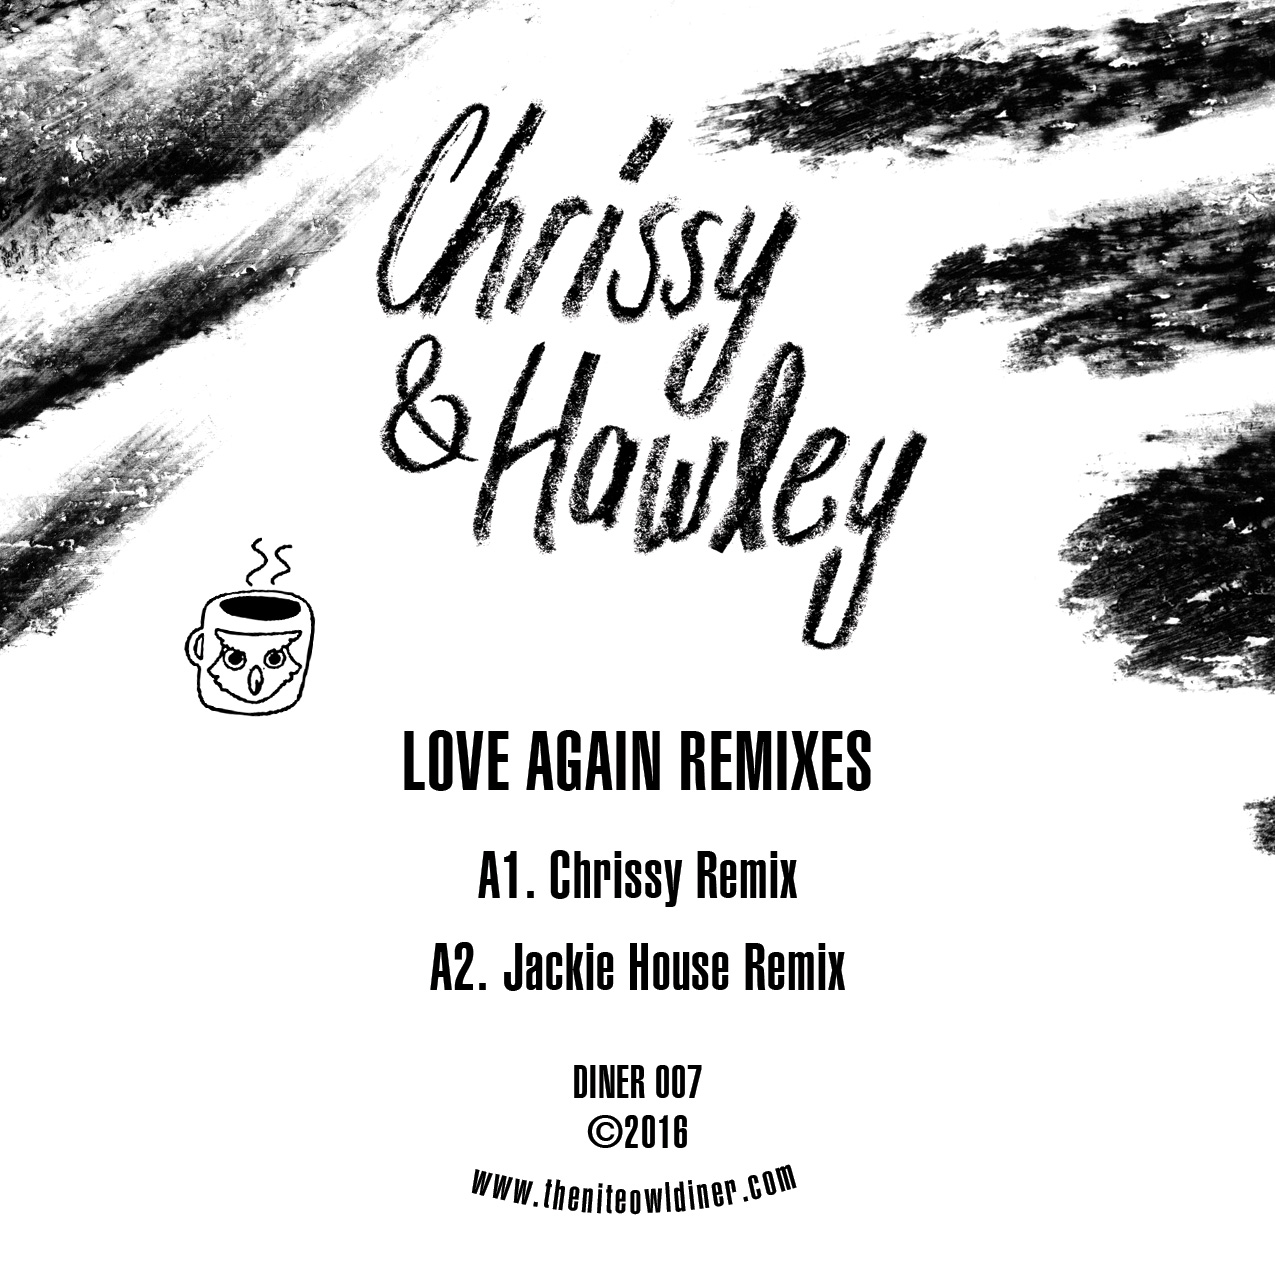 Chrissy & Hawley/LOVE AGAIN REMIXES 12"